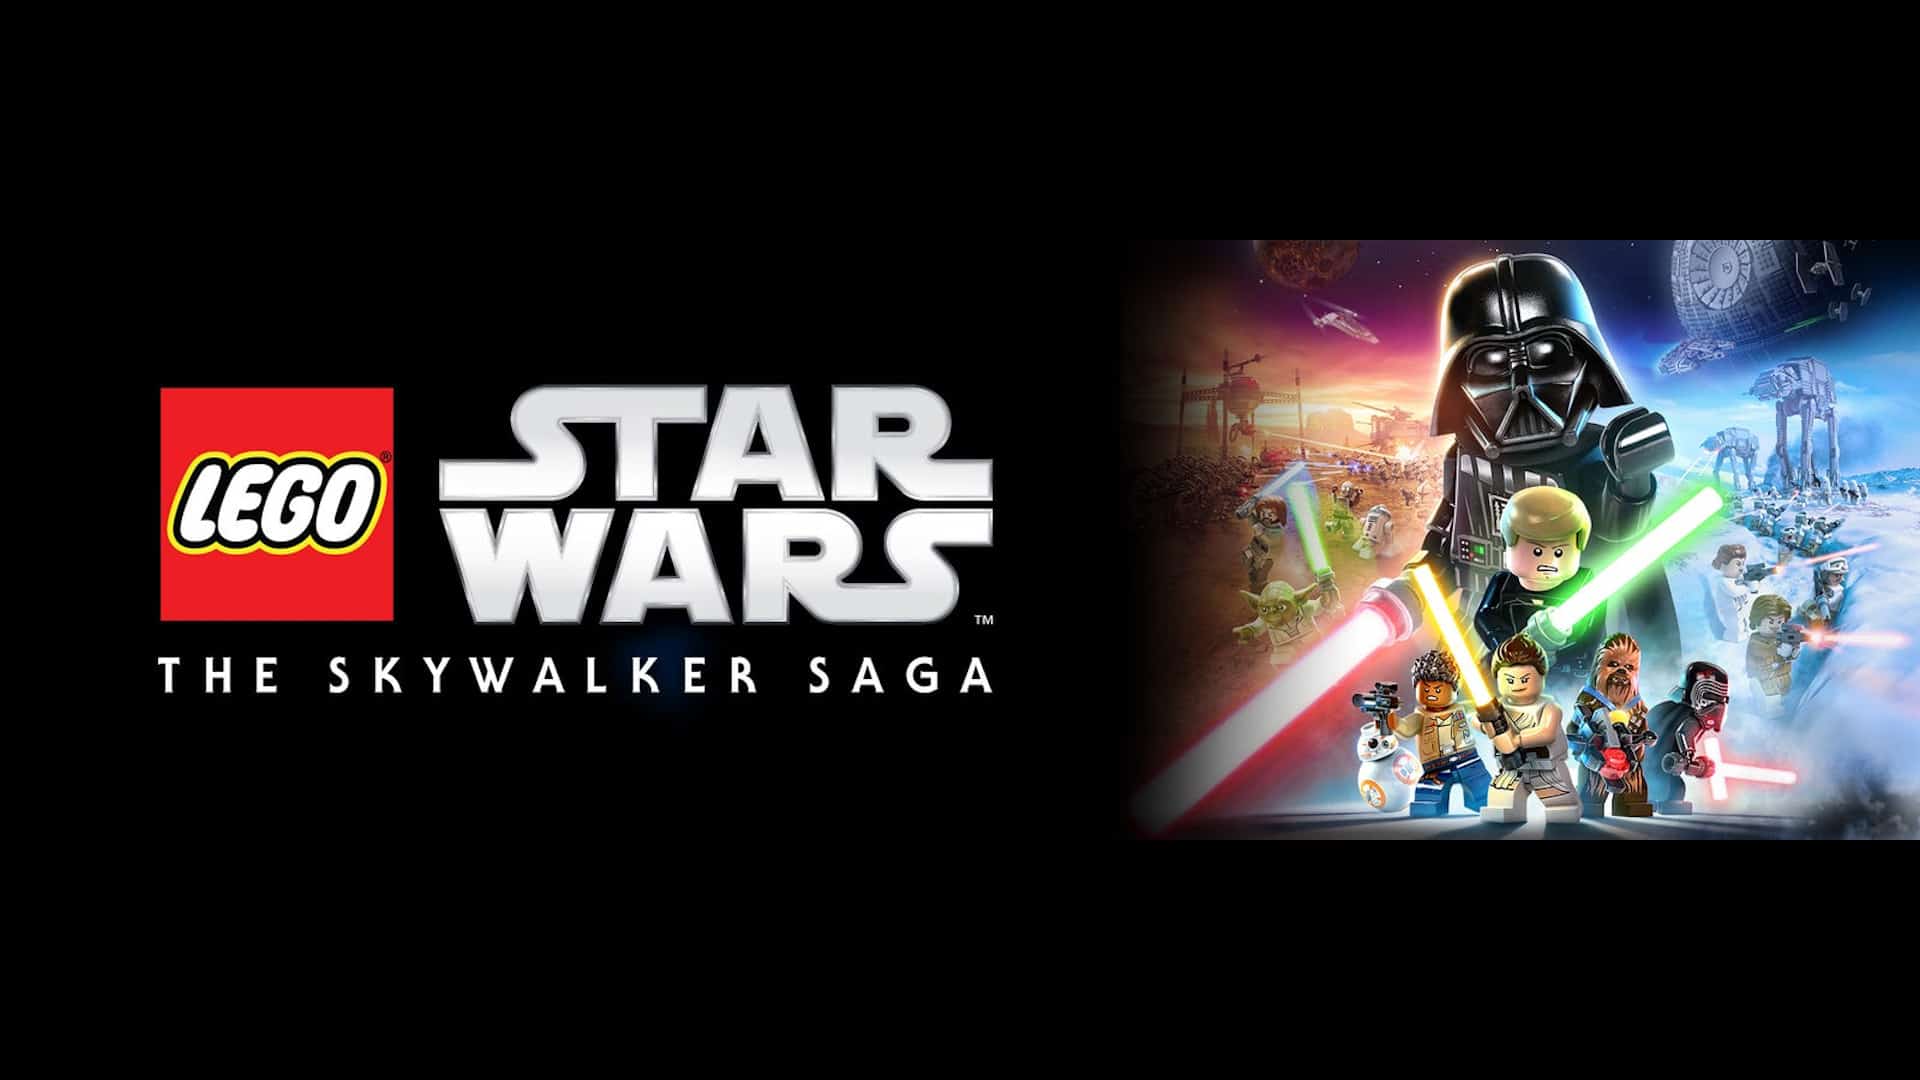 Lego Star Wars: The Skywalker Saga Collectibles